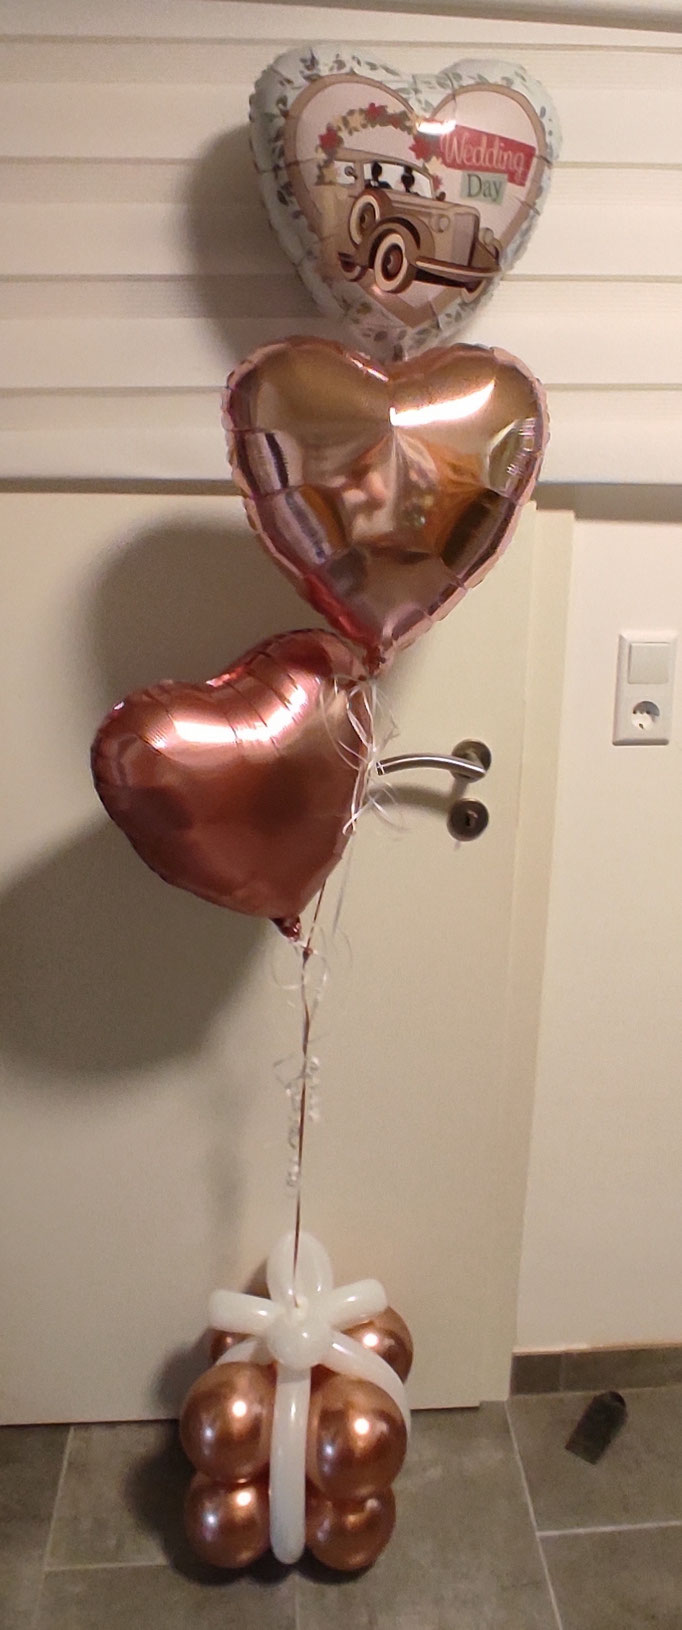 Ballonkiste mit Folienballon 45 cm Motivherz + 2 neutrale Herzen - 25,00 €